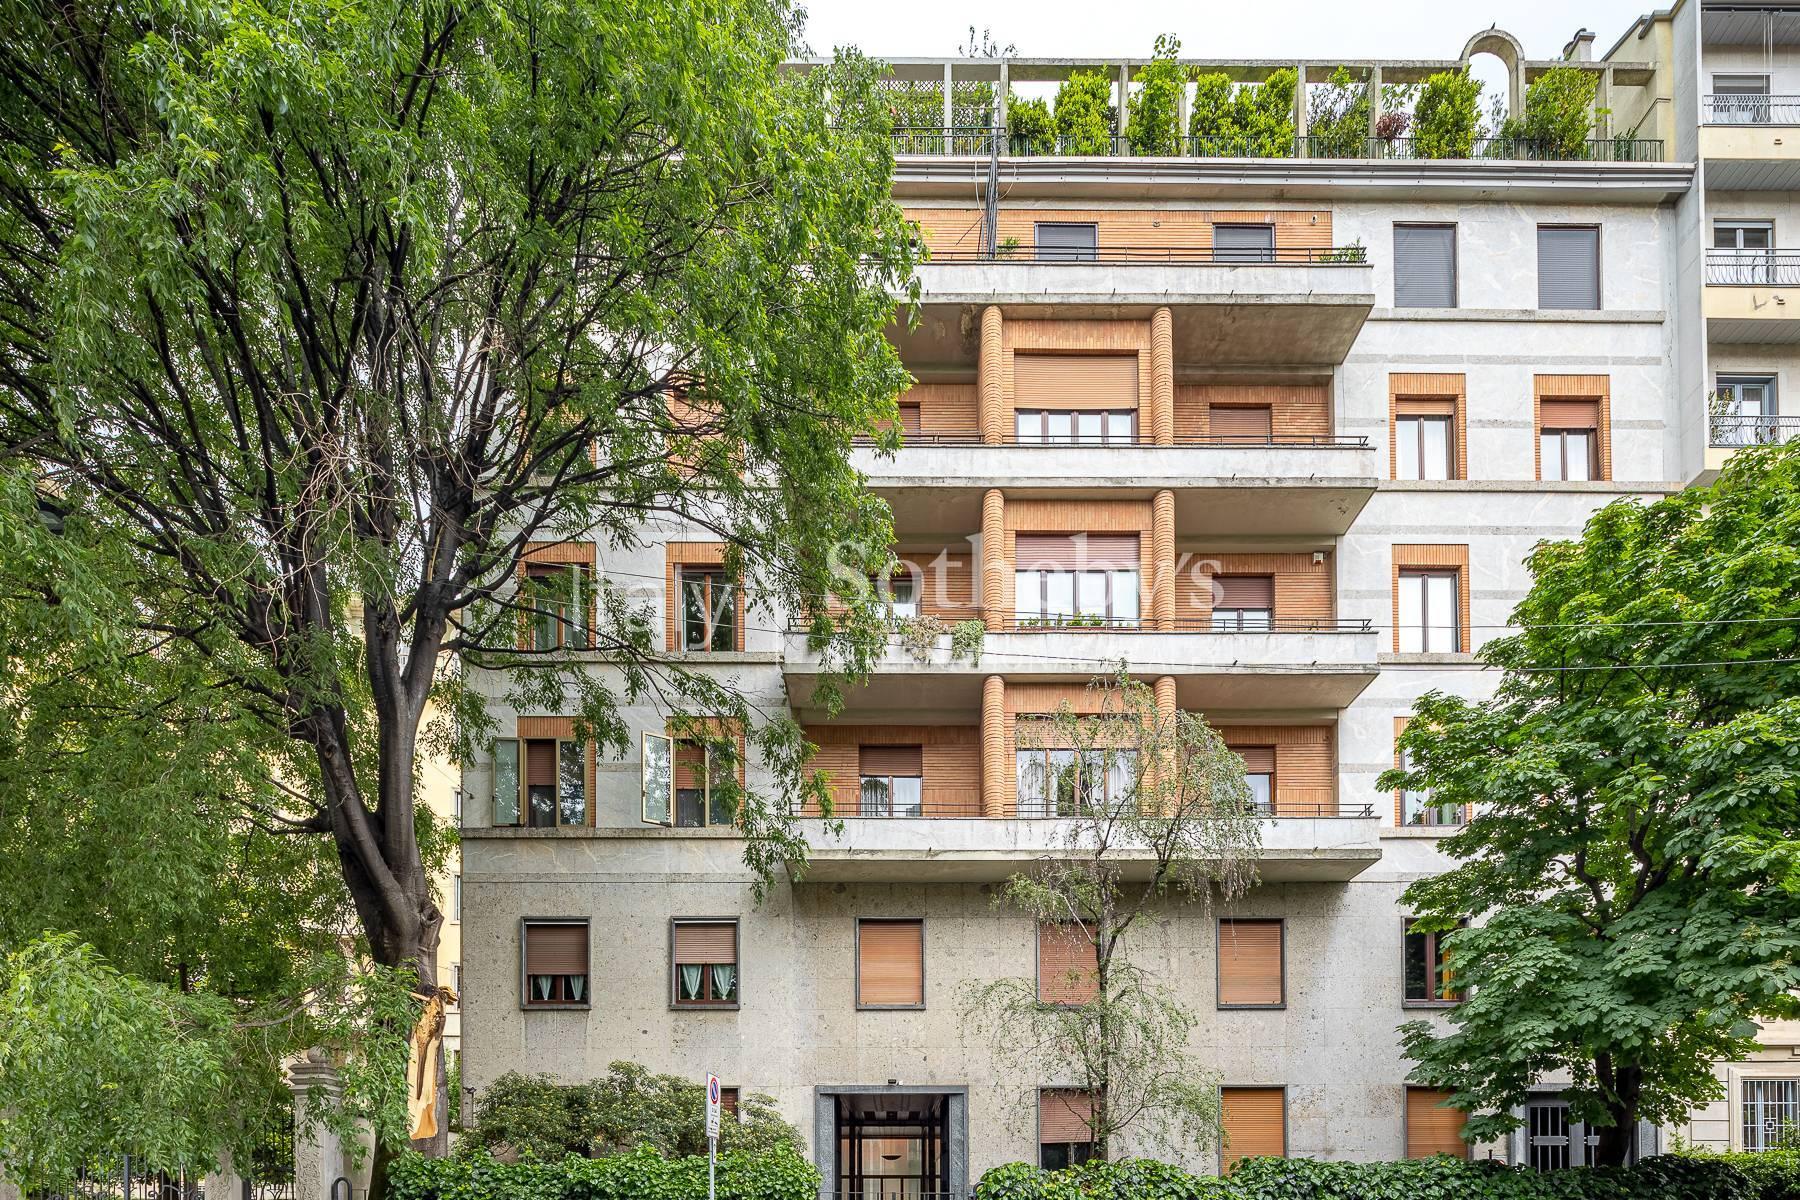 Superb furnished apartment in the Bianca di Savoia / Quadronno area - 26